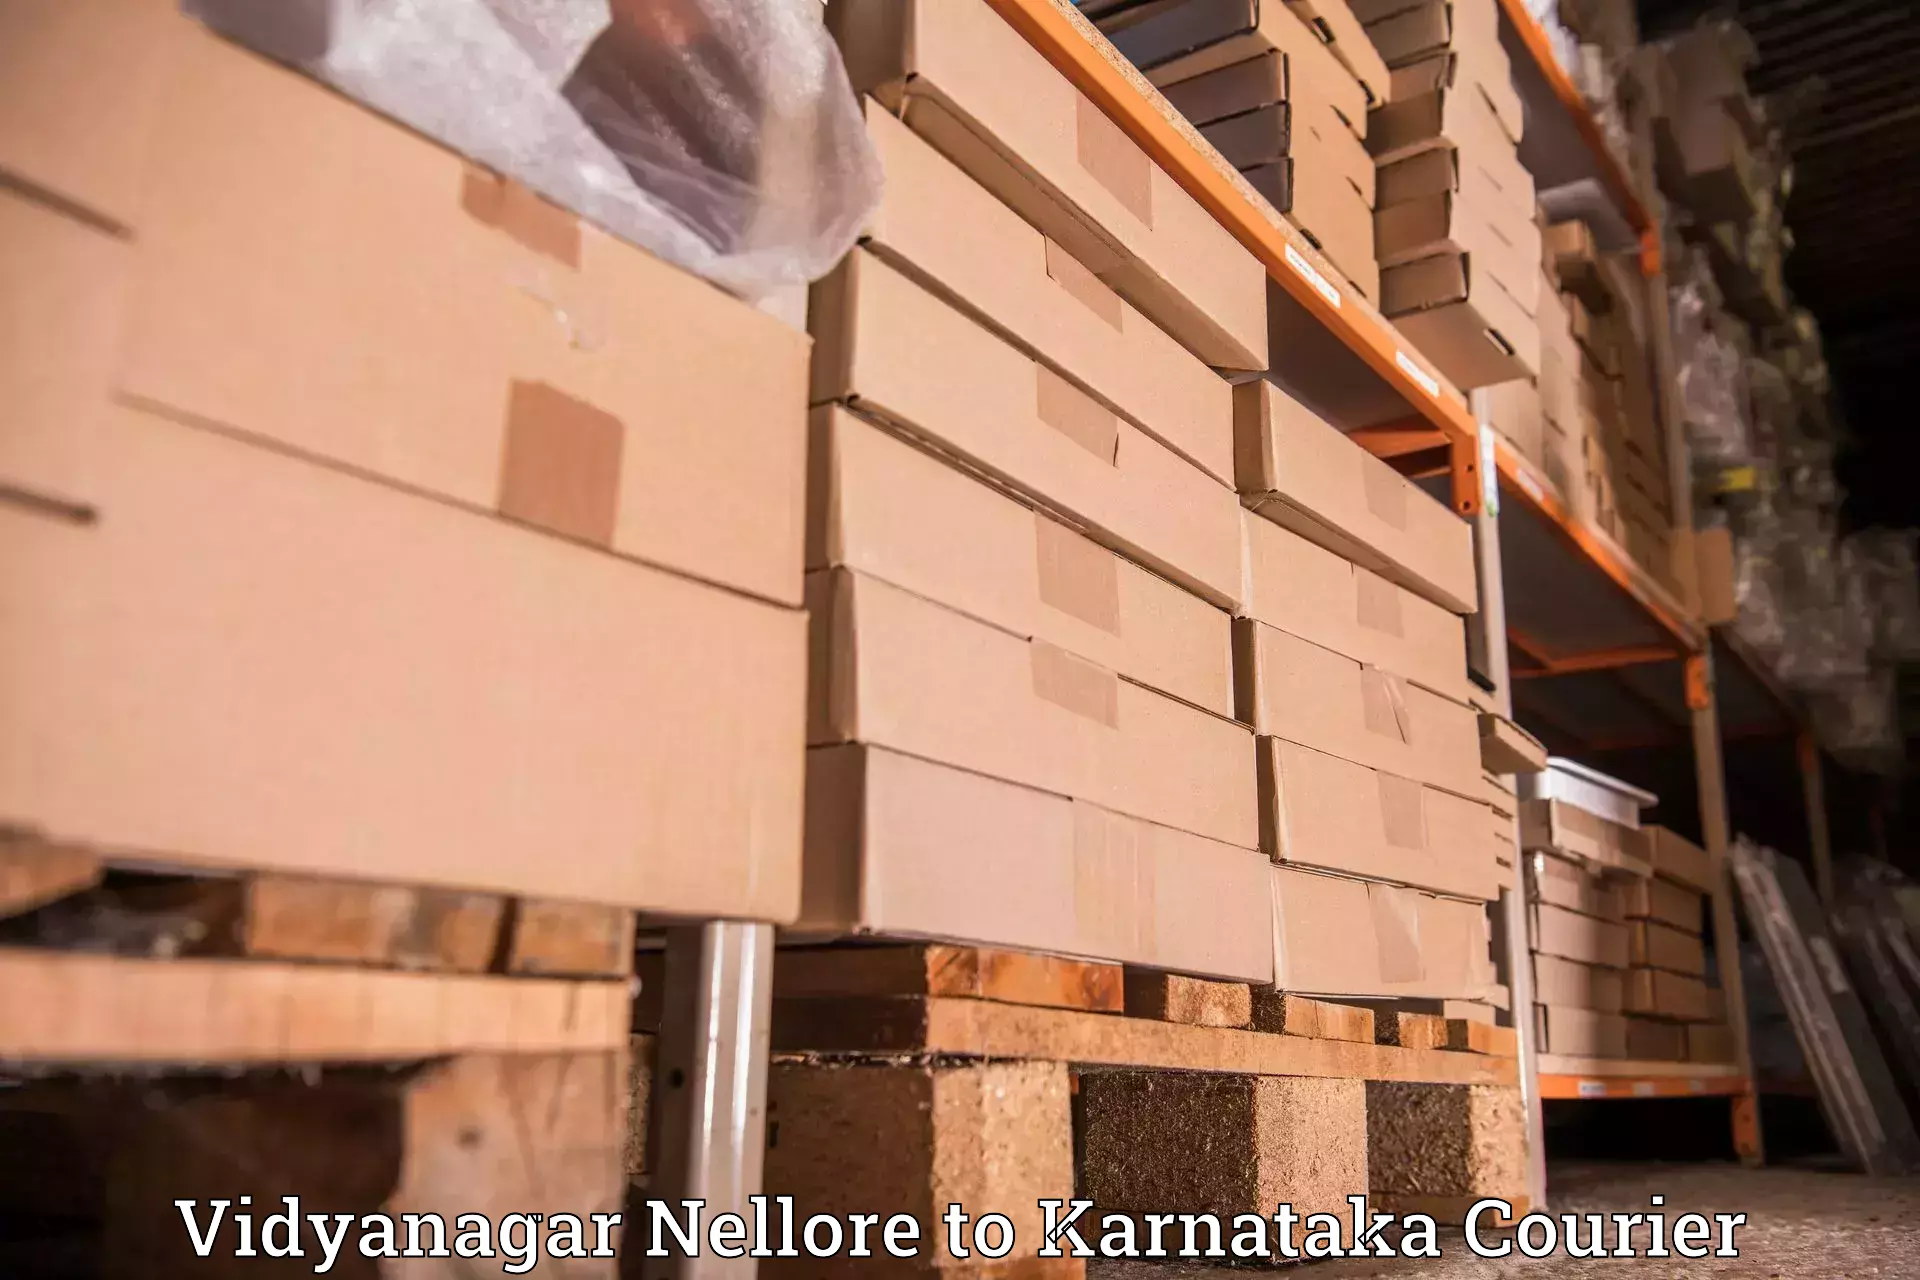 Courier service partnerships in Vidyanagar Nellore to Kadur